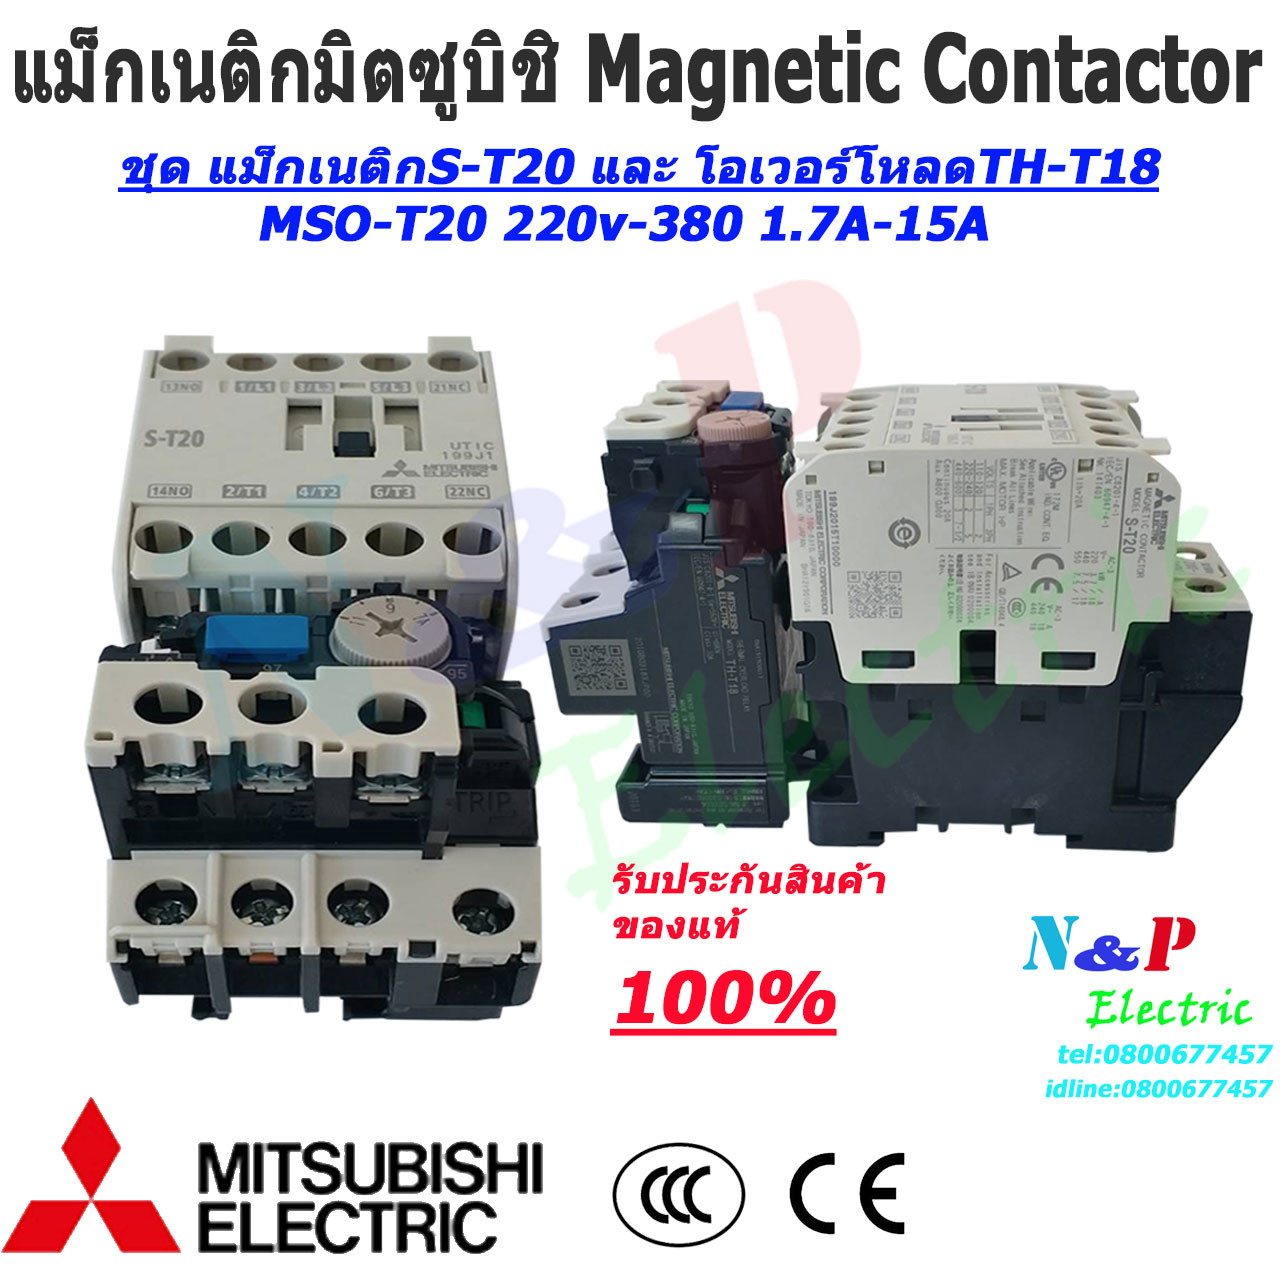 MITSUBISHI MSO-T20 220V-380V1.7A-18A ชุดแม็กเนติก พร้อมโอเวอร์โหลด มิตซูบิชิ Magnetic Contactor+OVERLOAD RELAY